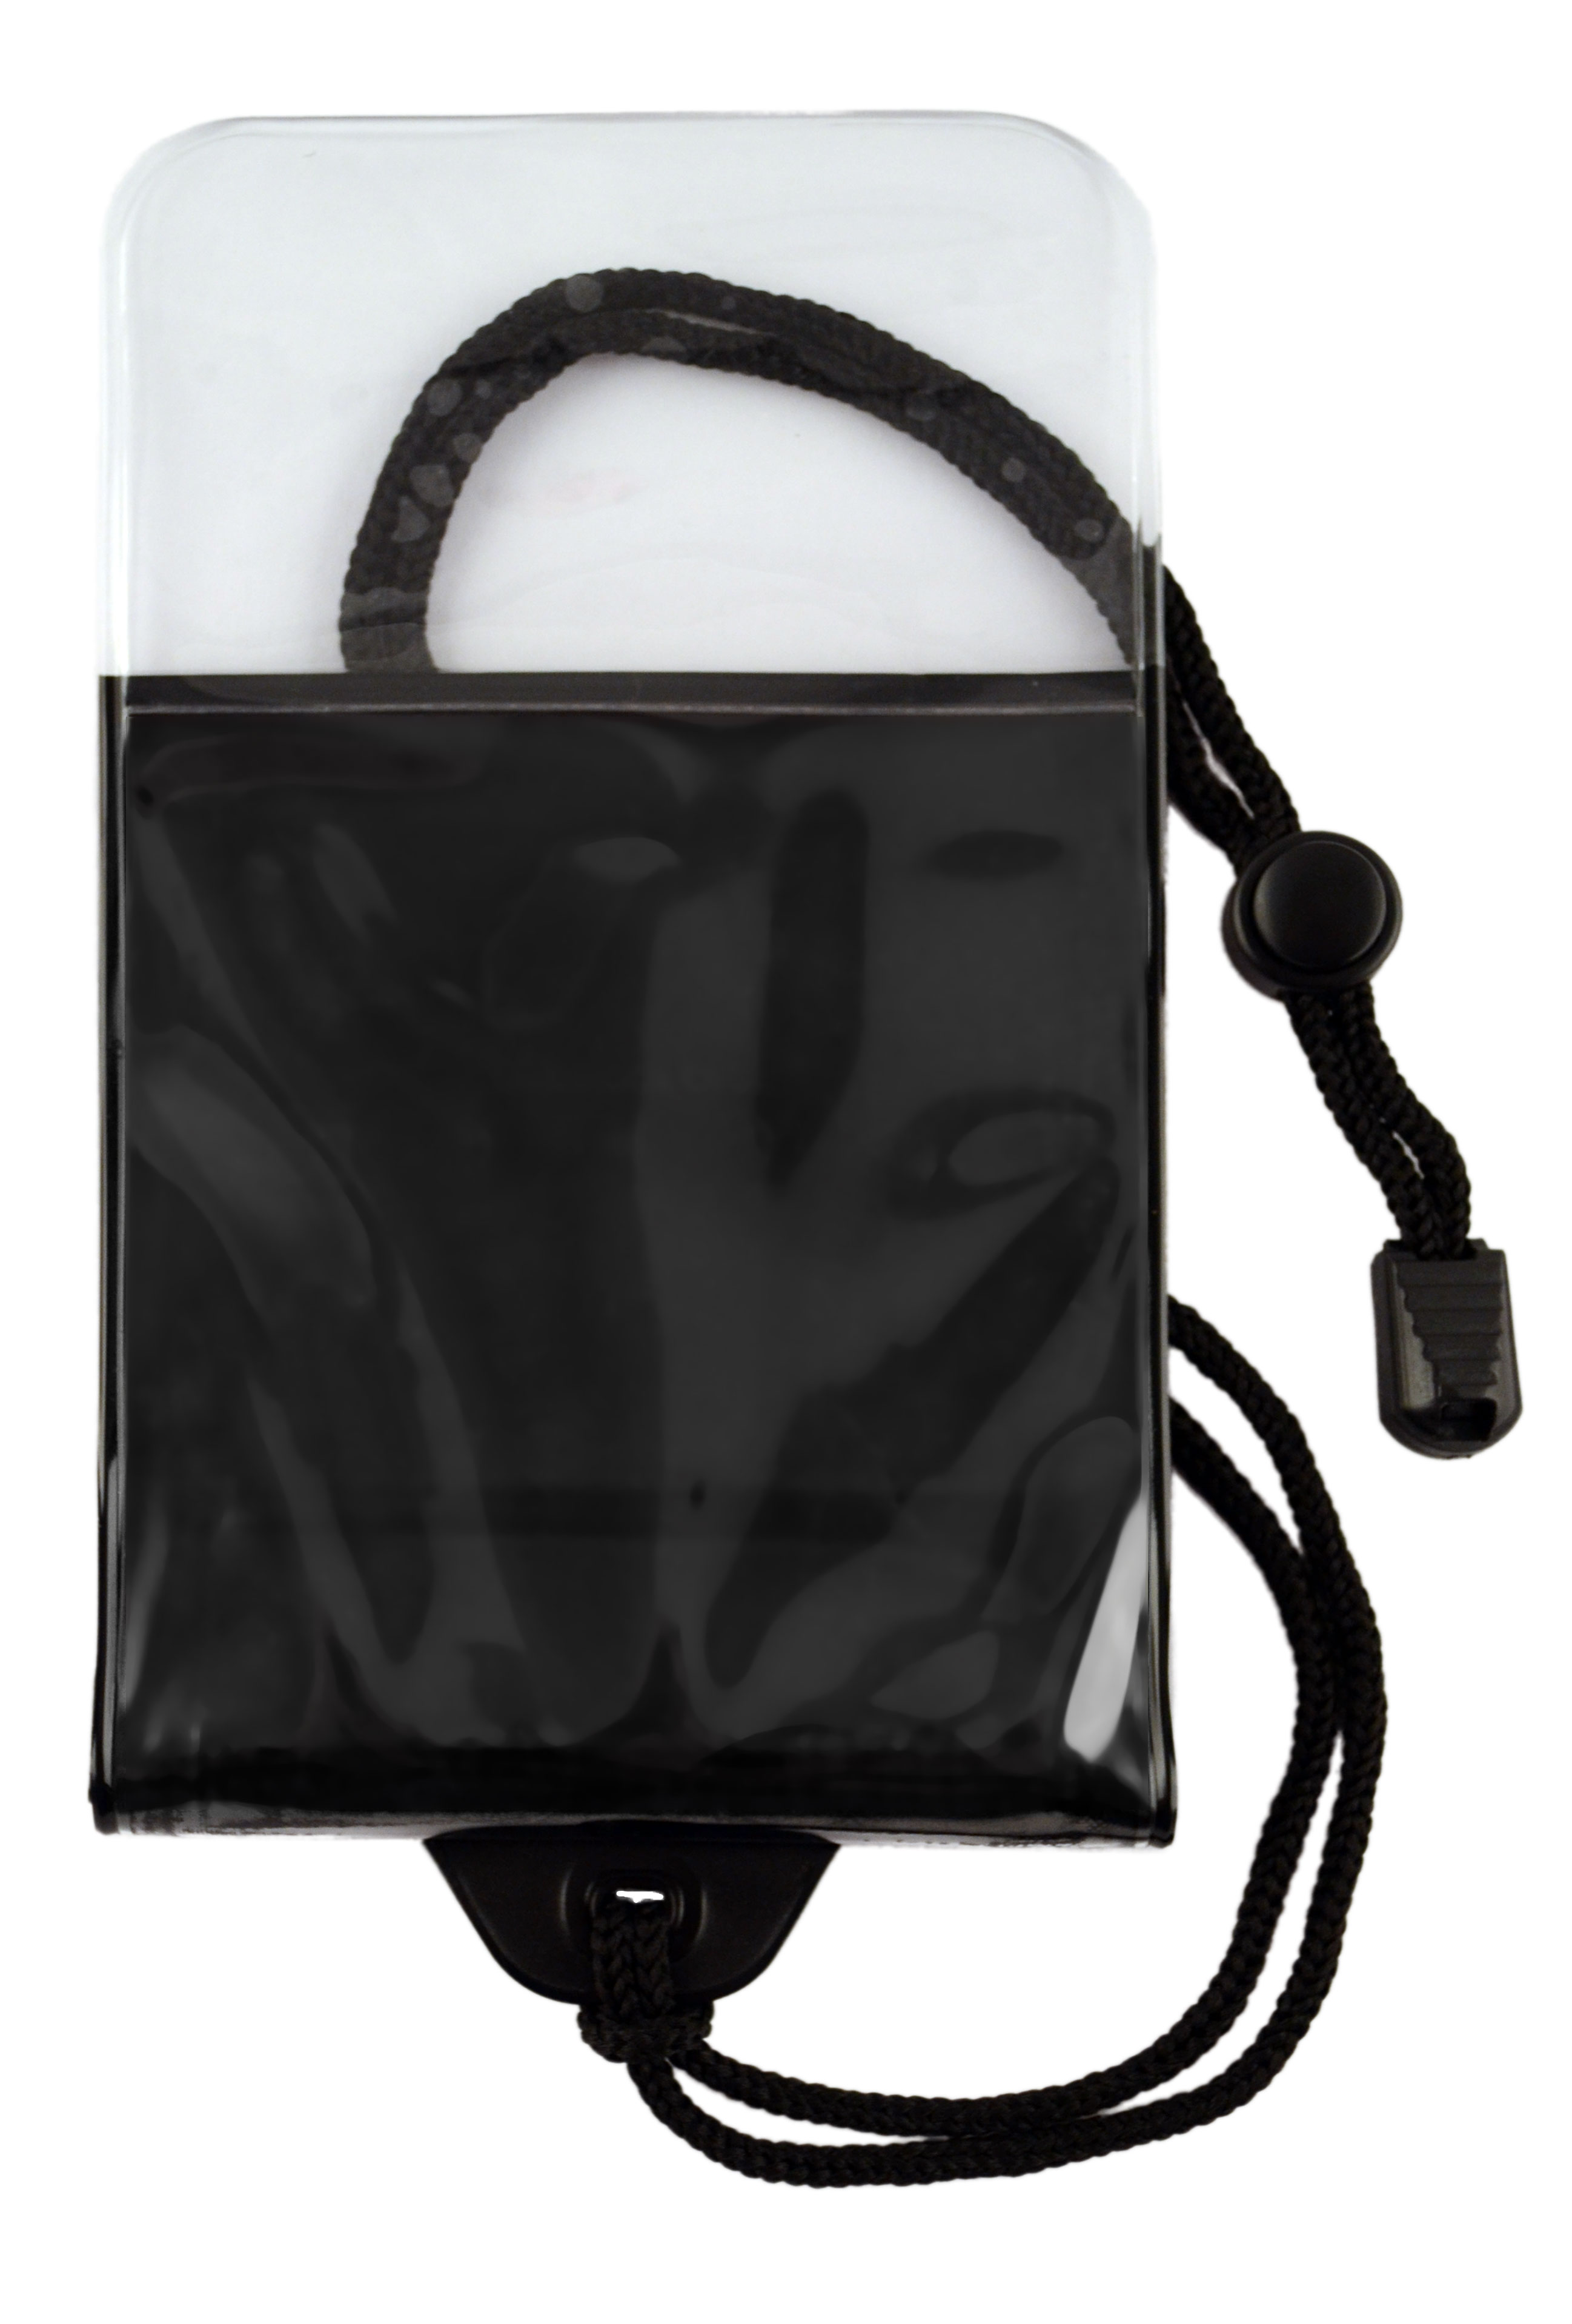 DiCAPac waterproof Document Pouch, Multifunctional bag, medium, Black